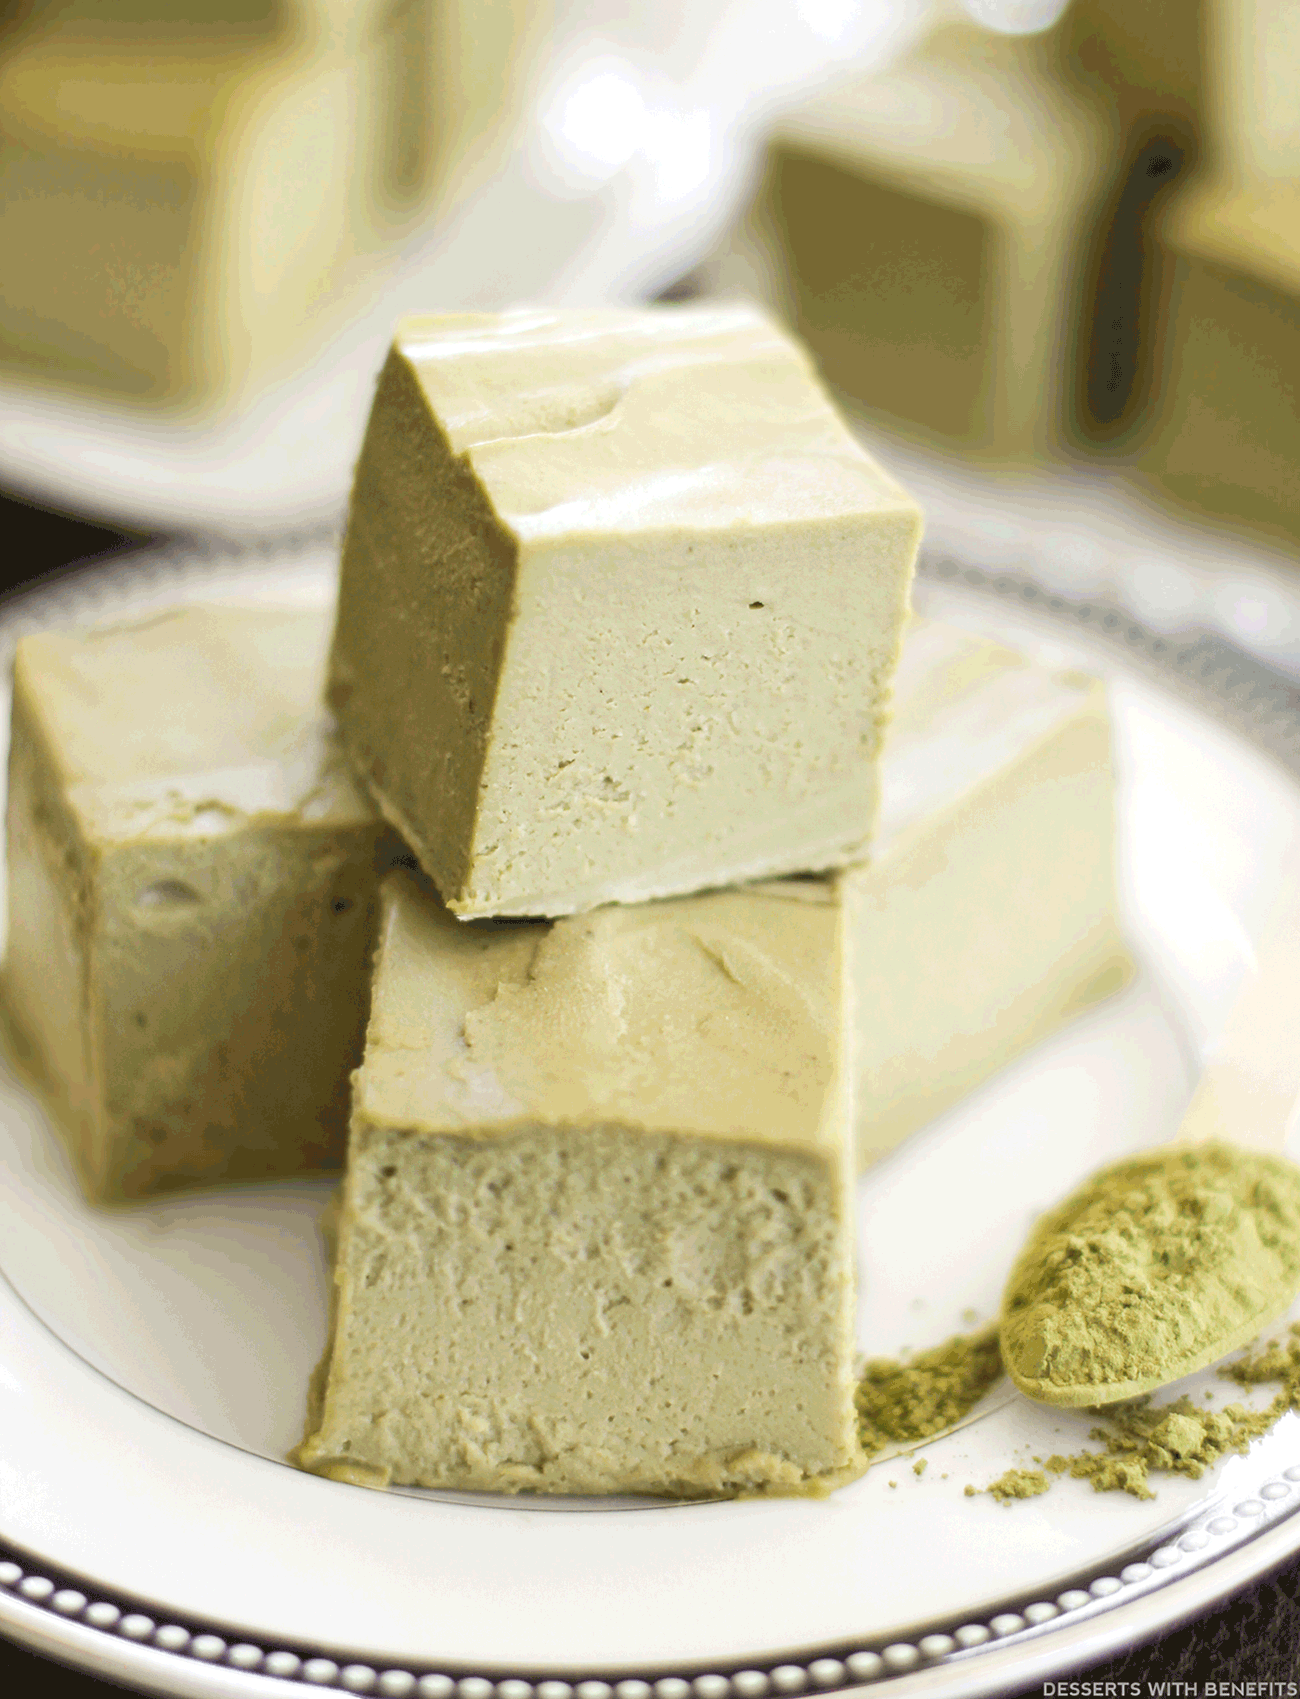 Healthy Raw Matcha Green Tea Fudge (no bake, sugar free, low carb, gluten free, dairy free, vegan) - Healthy Dessert Recipes at Desserts with Benefits